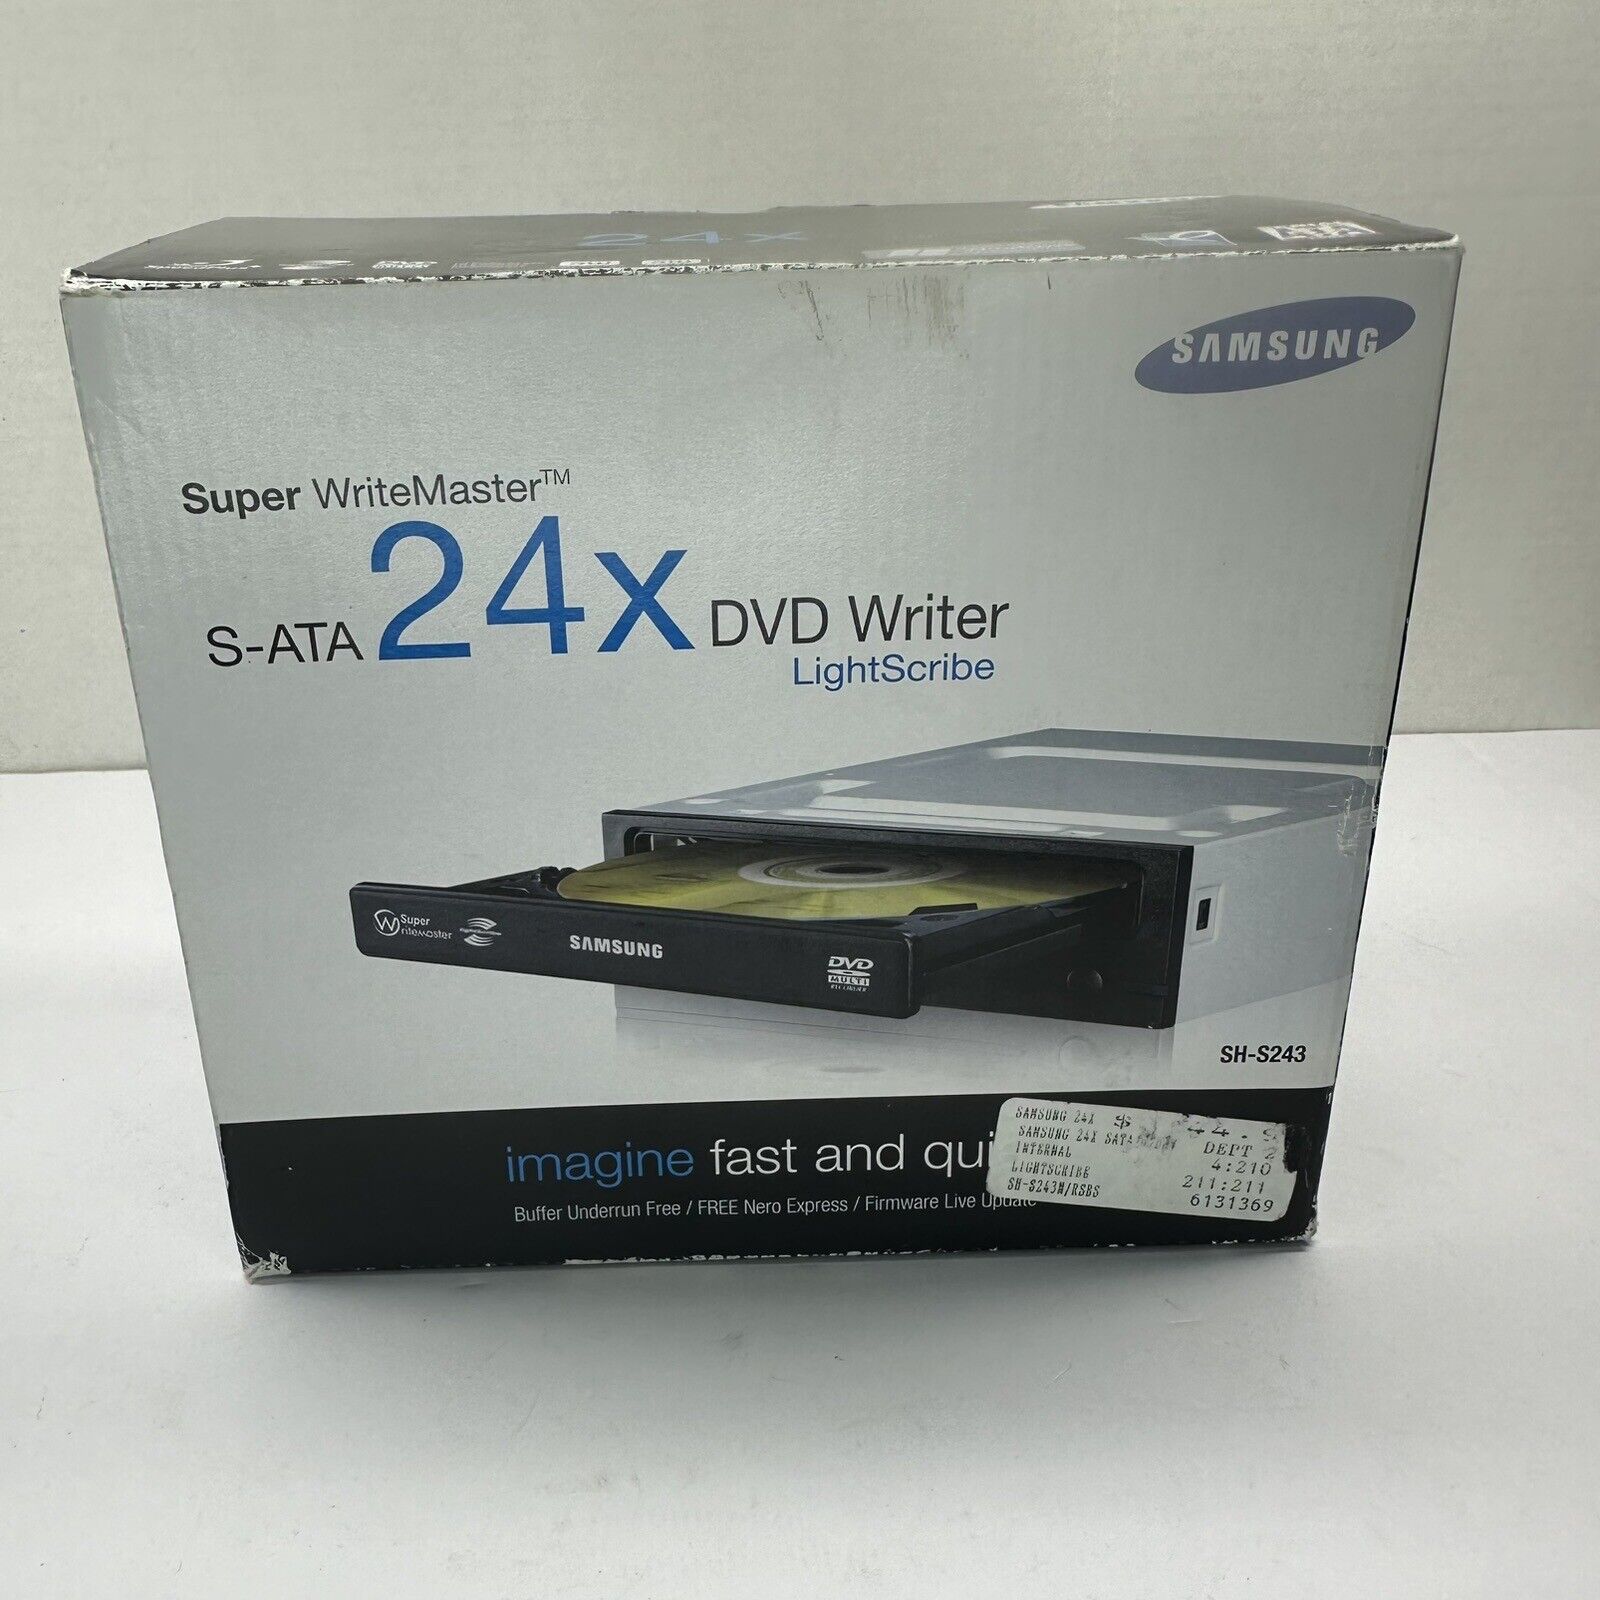 NEW IN BOX Samsung DVD Writer Model SH-S243 S-ATA 24x PC Disc Drive